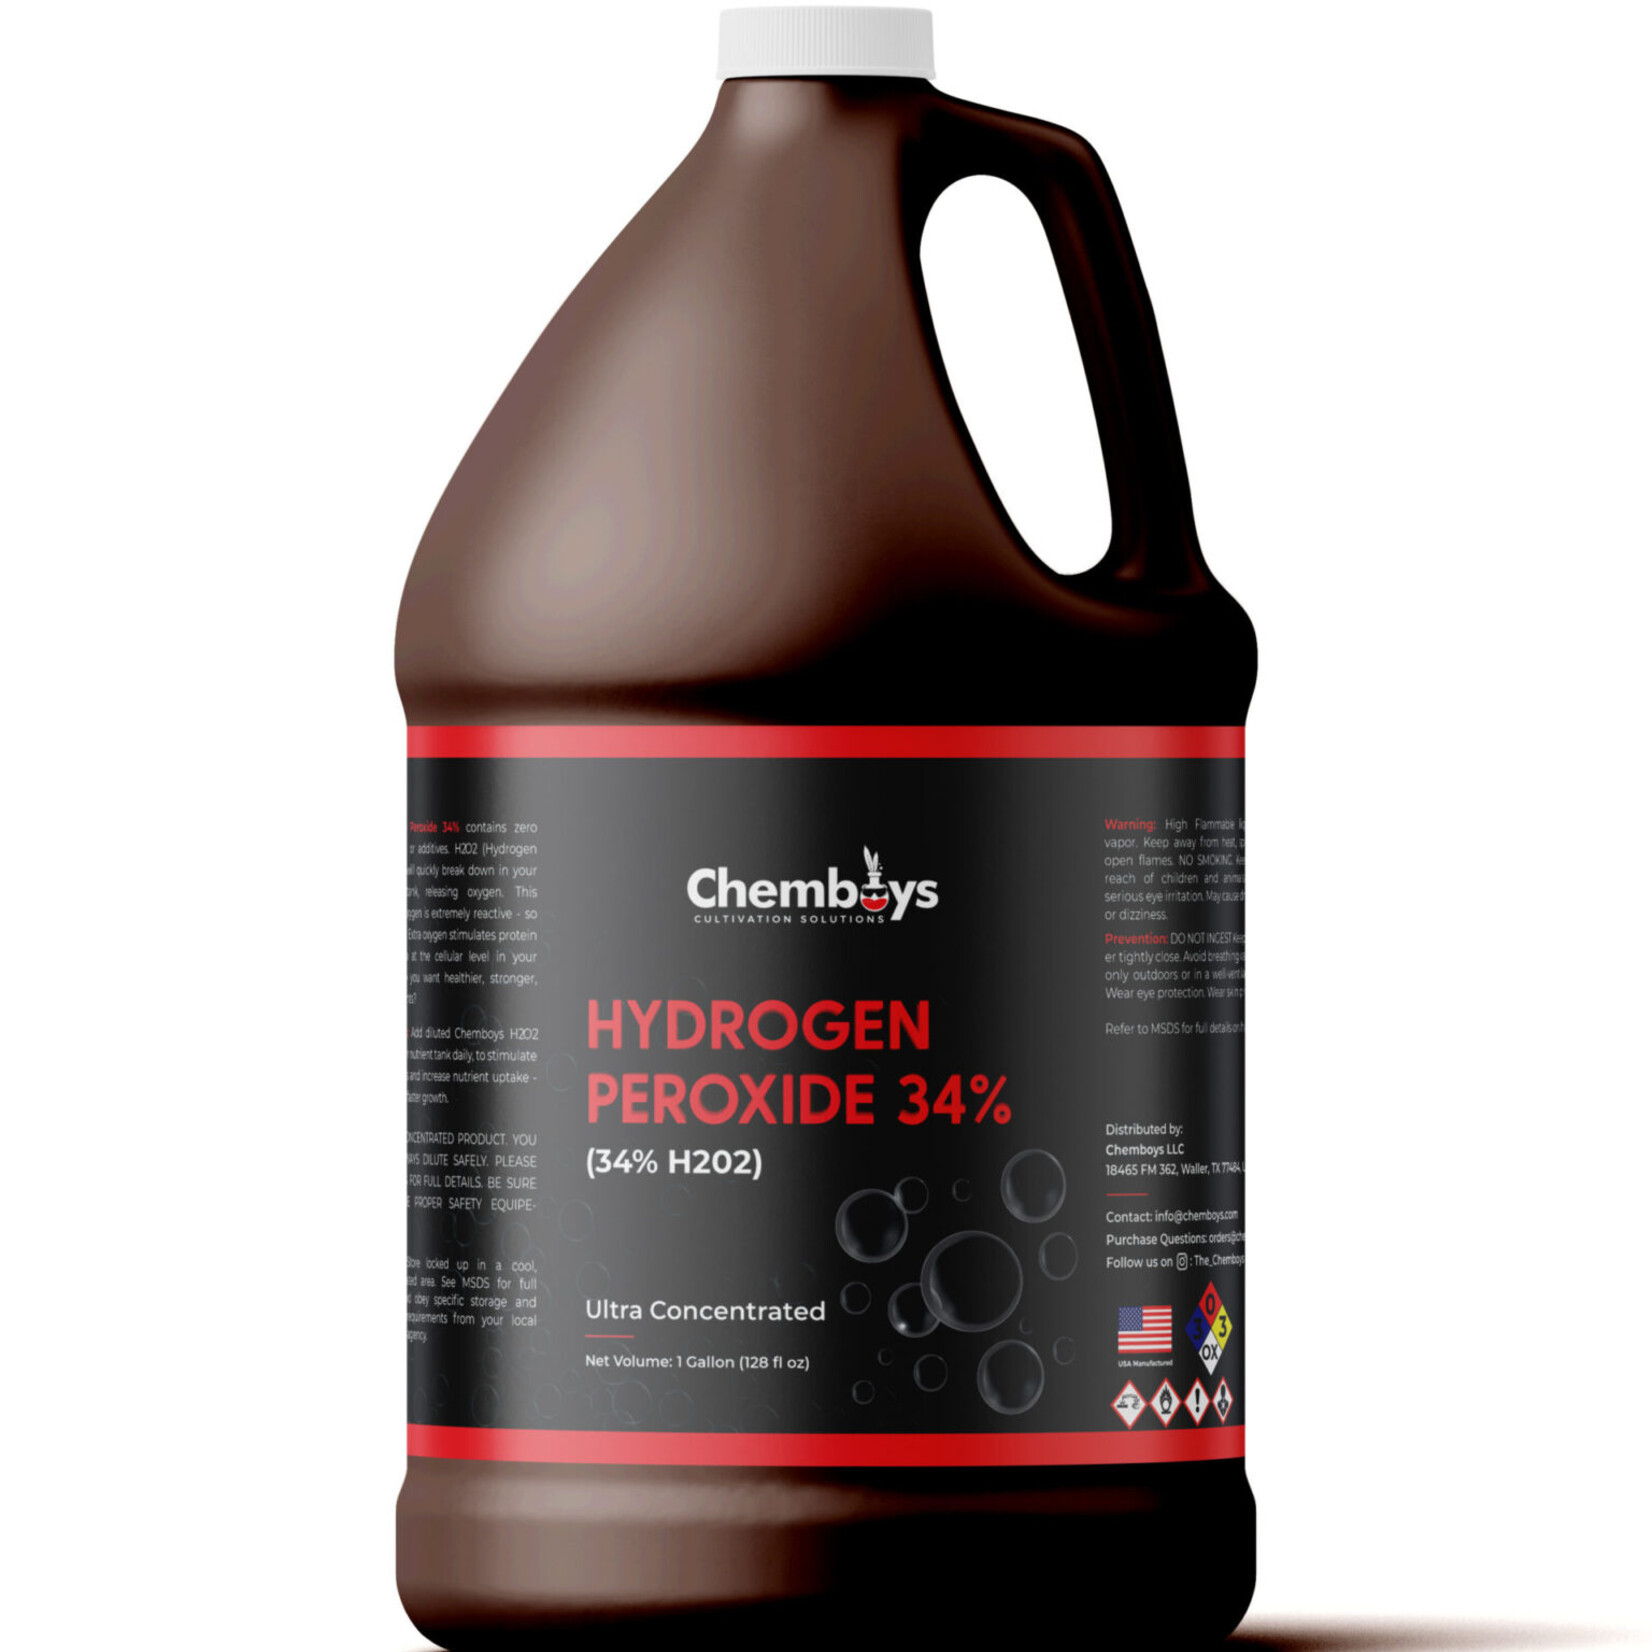 Chemboys Chemboys 34% Hydrogen Peroxide, 5 Gallon